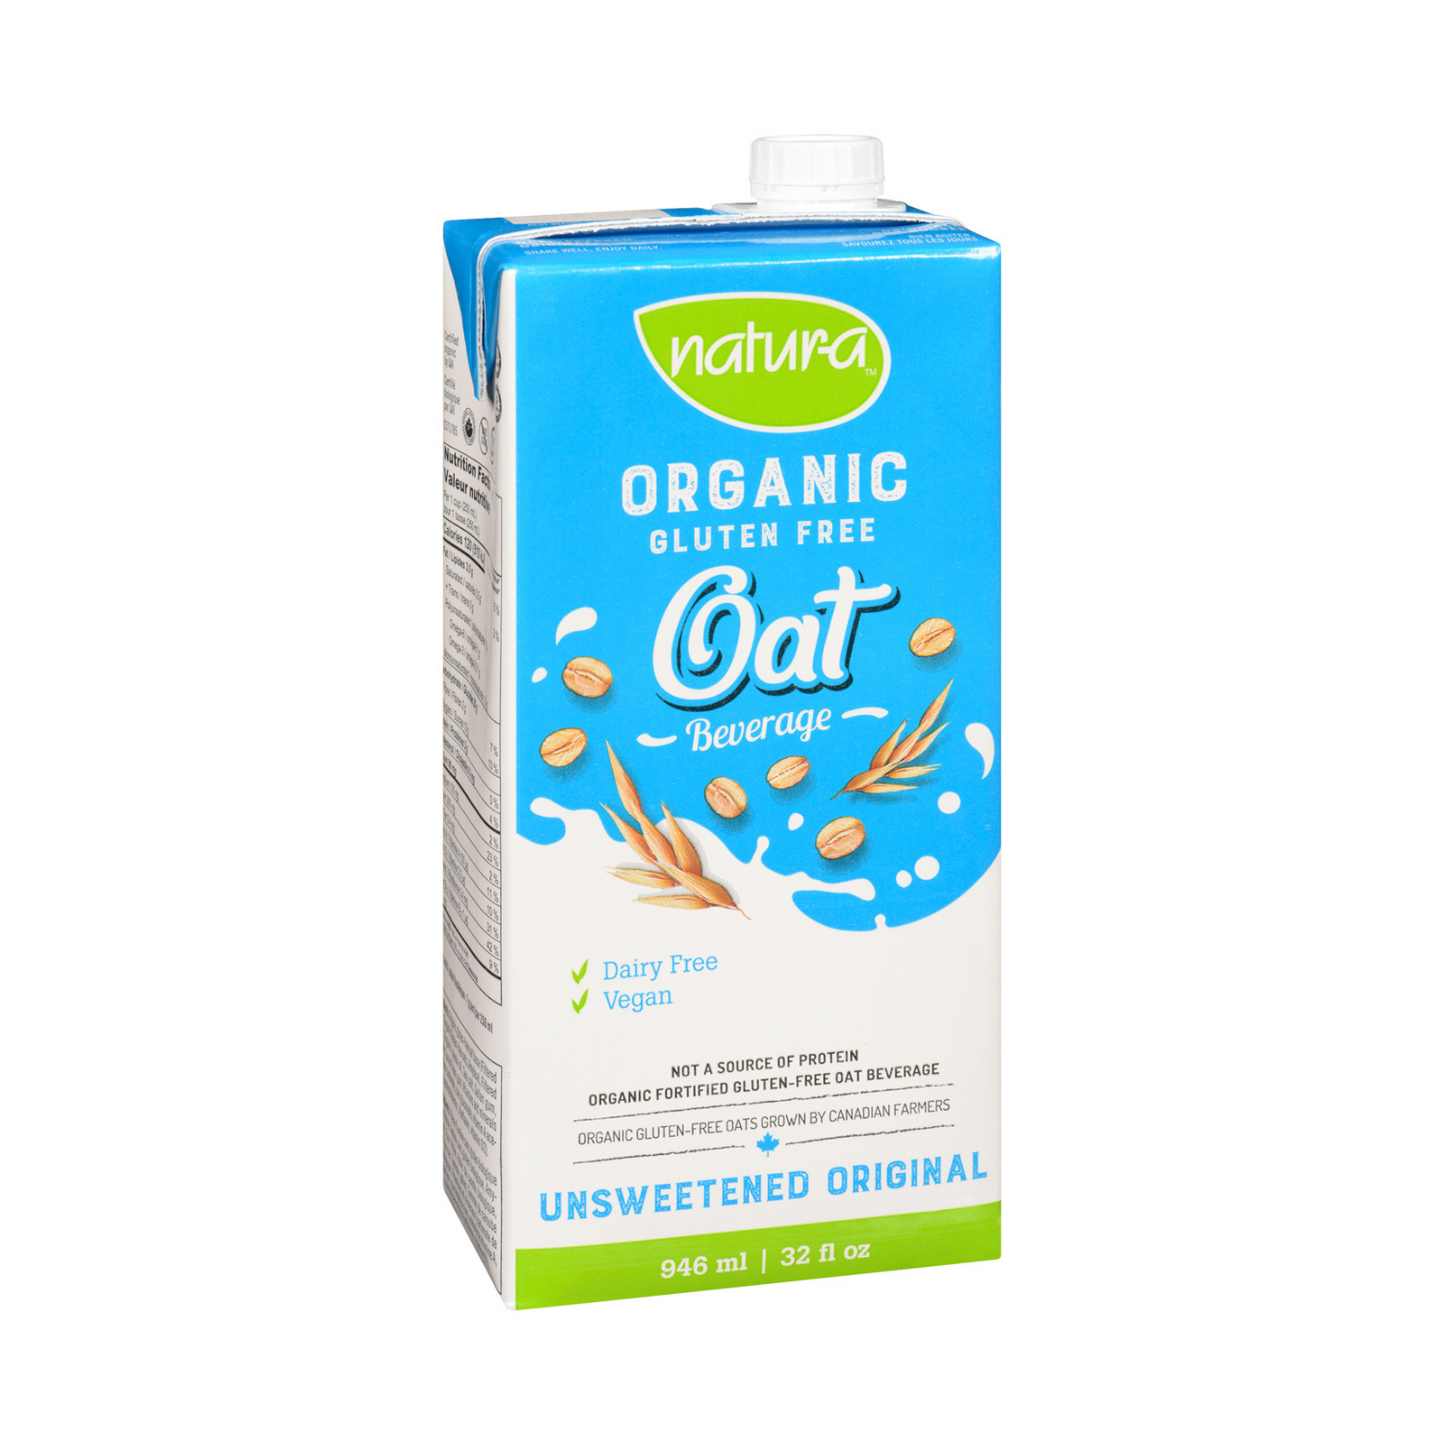 Natur-a Oat Beverage - Original Unsweetened (Organic), 946 ml.